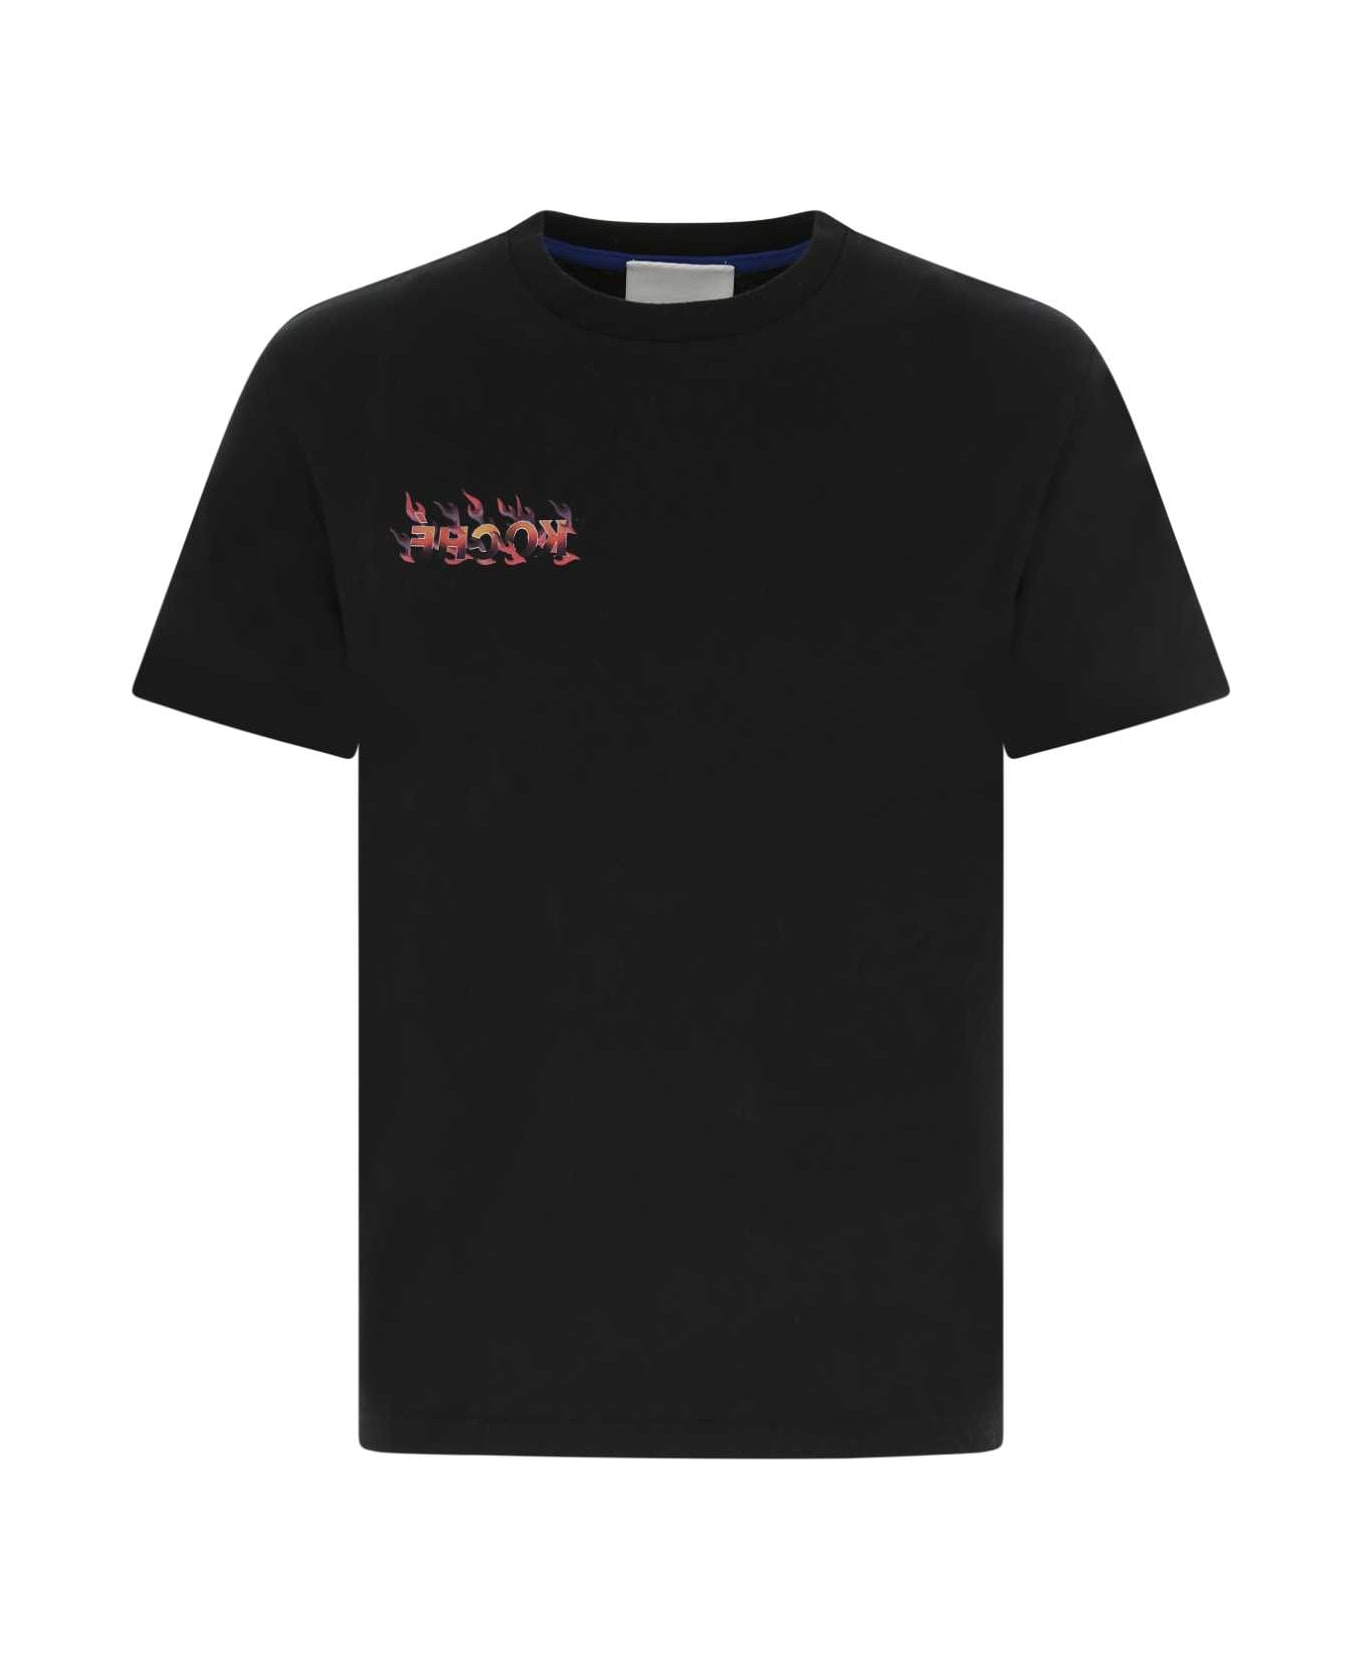 Koché Black Cotton T-shirt - 900